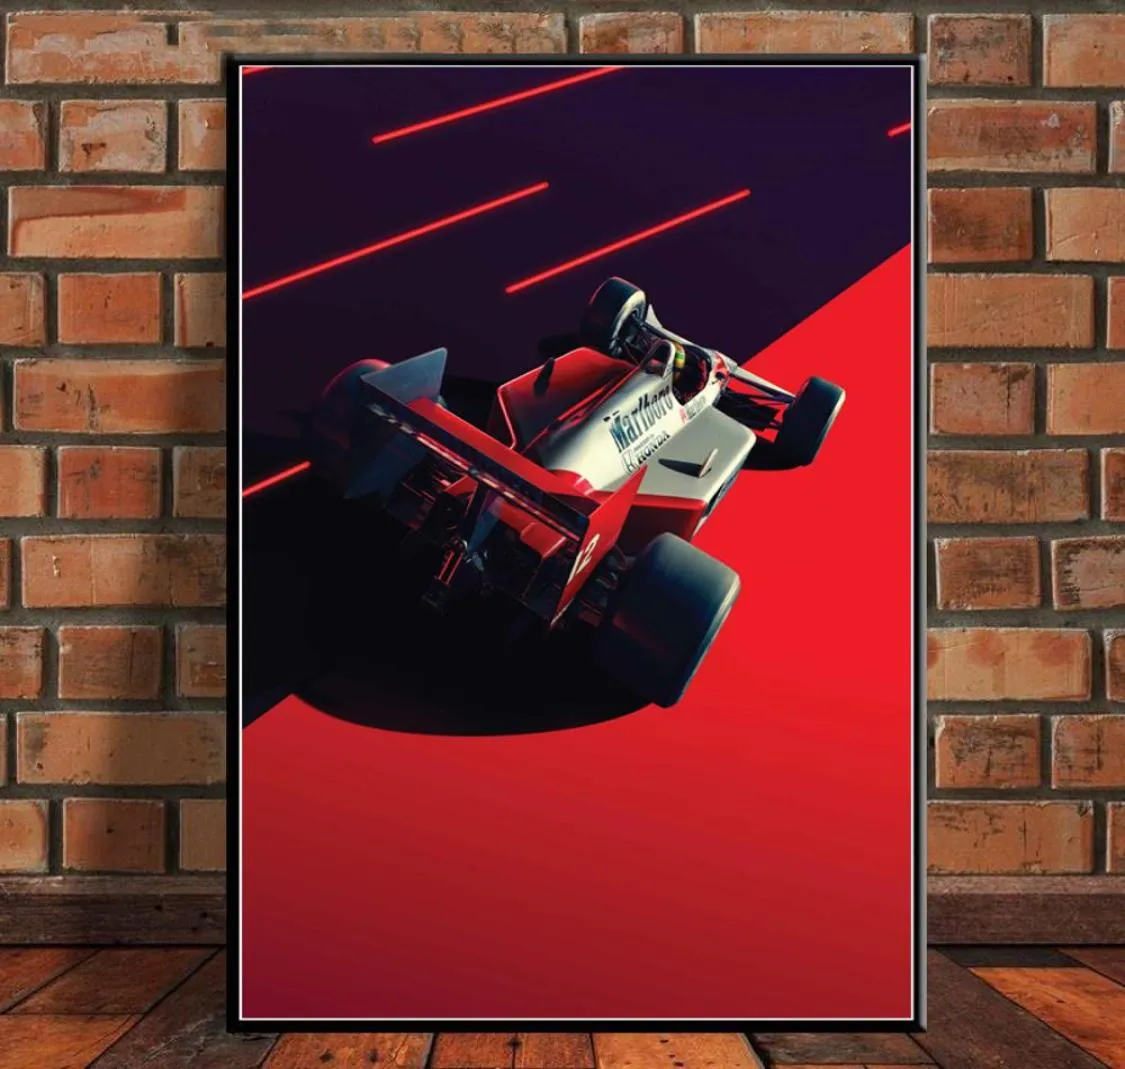 Hot Mclaren World Ayrton Senna F1 Formula Racing Car Poster Wall Art Canvas Picture Painting Modern For Home Room Decor9828410